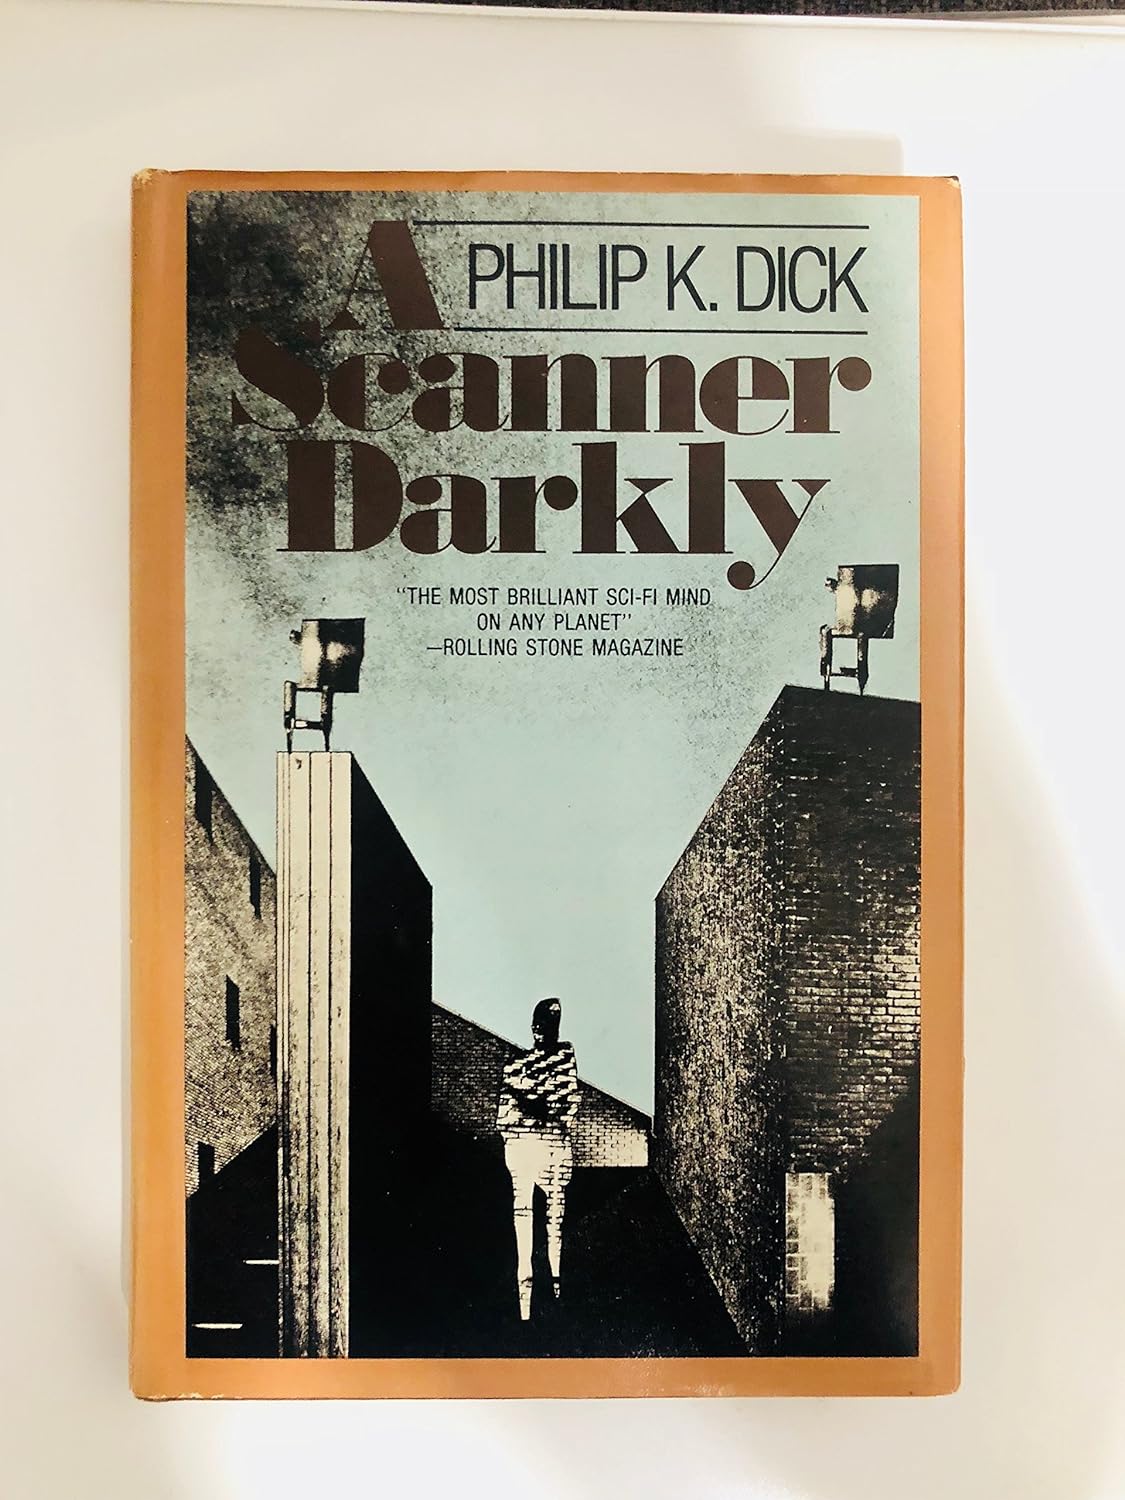 A scanner darkly By Philip K. Dick